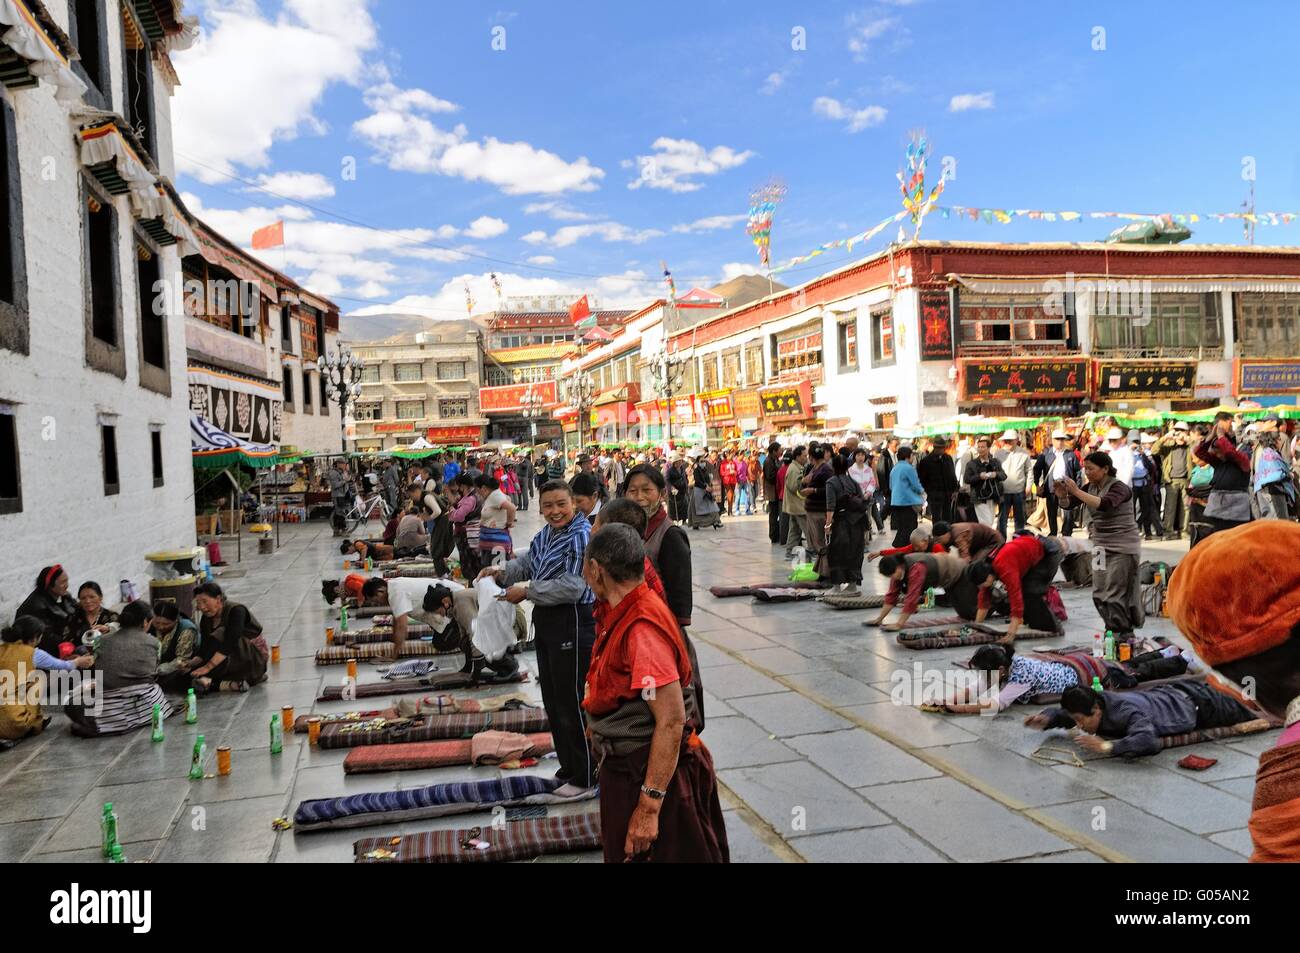 Pray at the Jokhang Temple Lhasa Tibet China Stock Photo